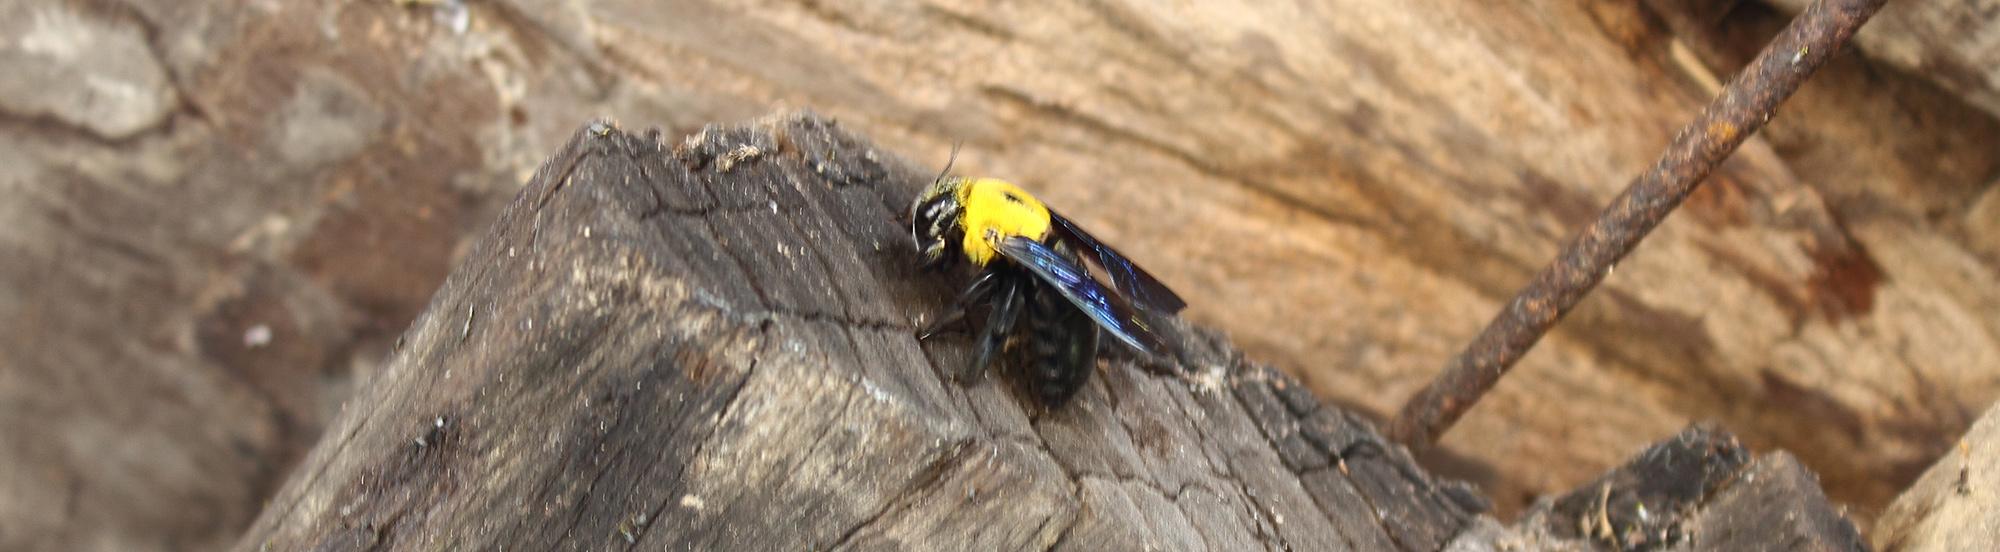 carpenter bee drilling into a stump